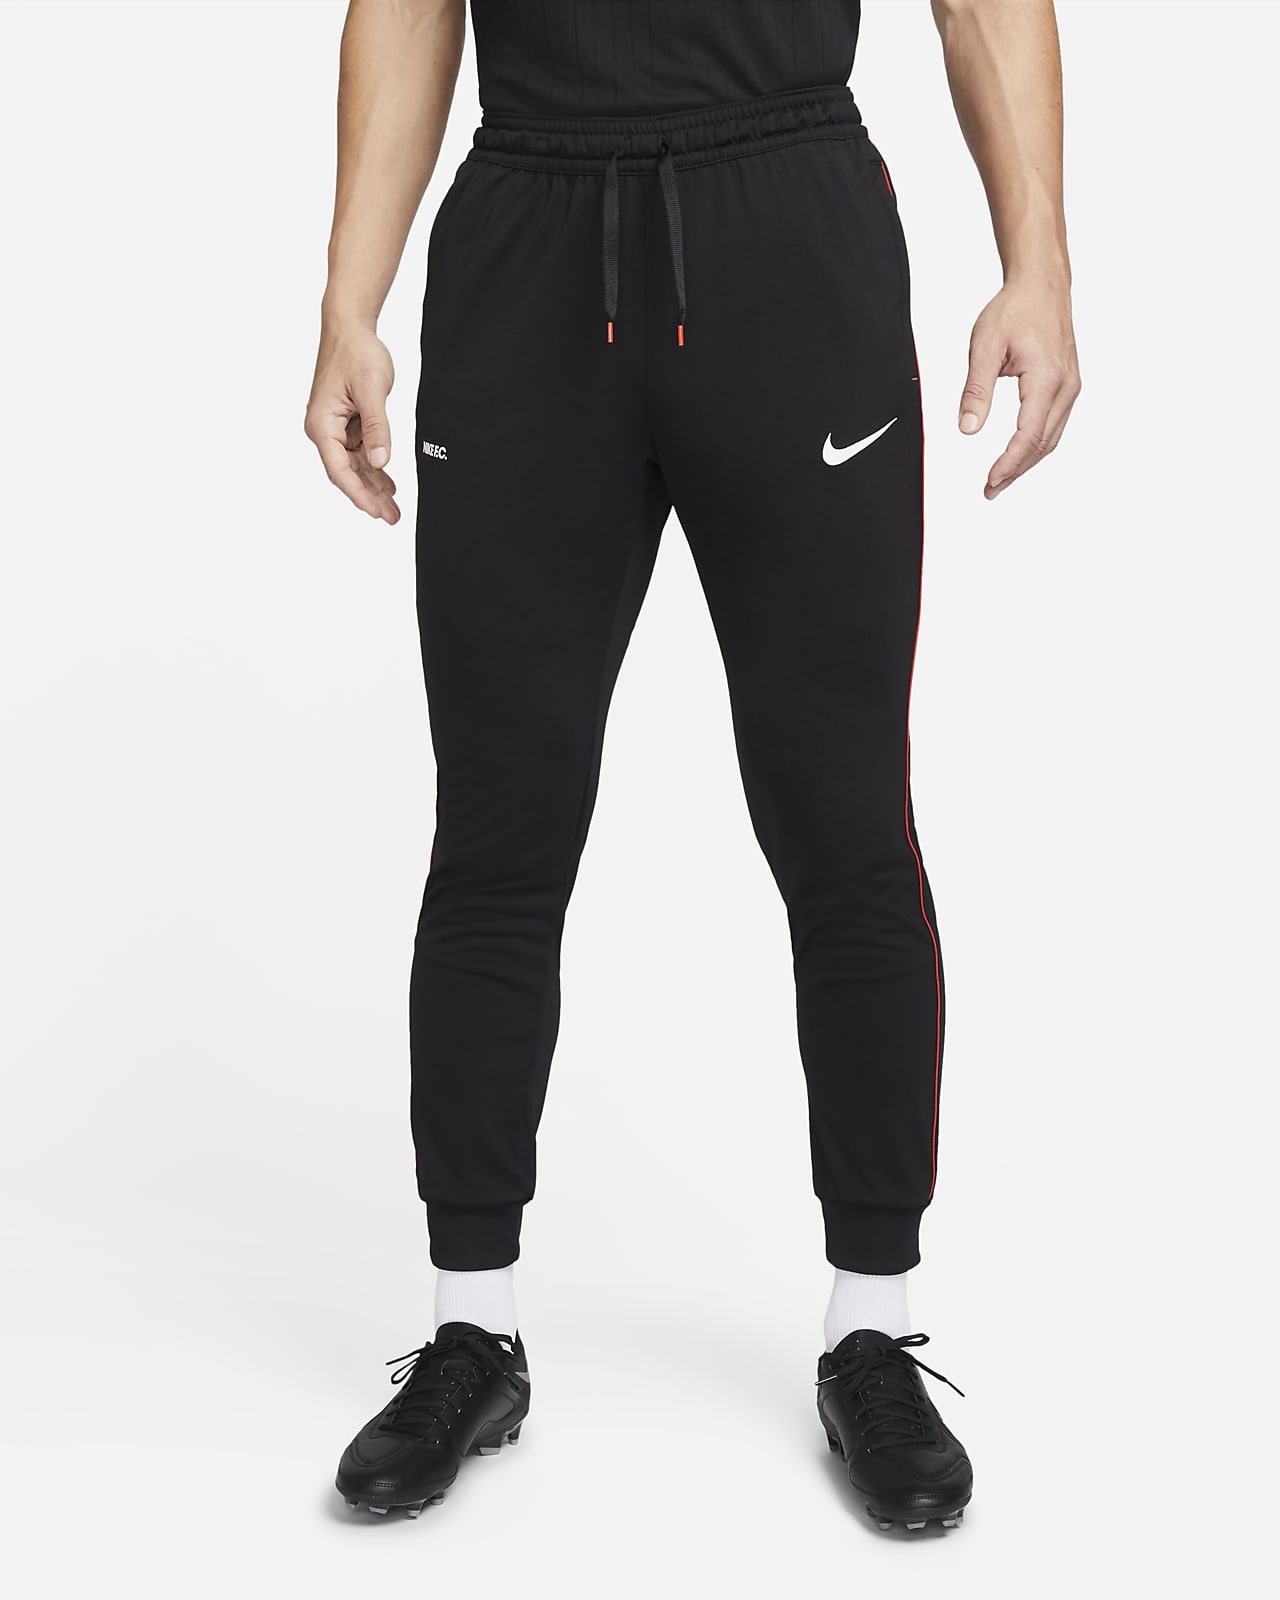 Nike Dri-FIT F.C. Libero Pantalons de futbol - Home